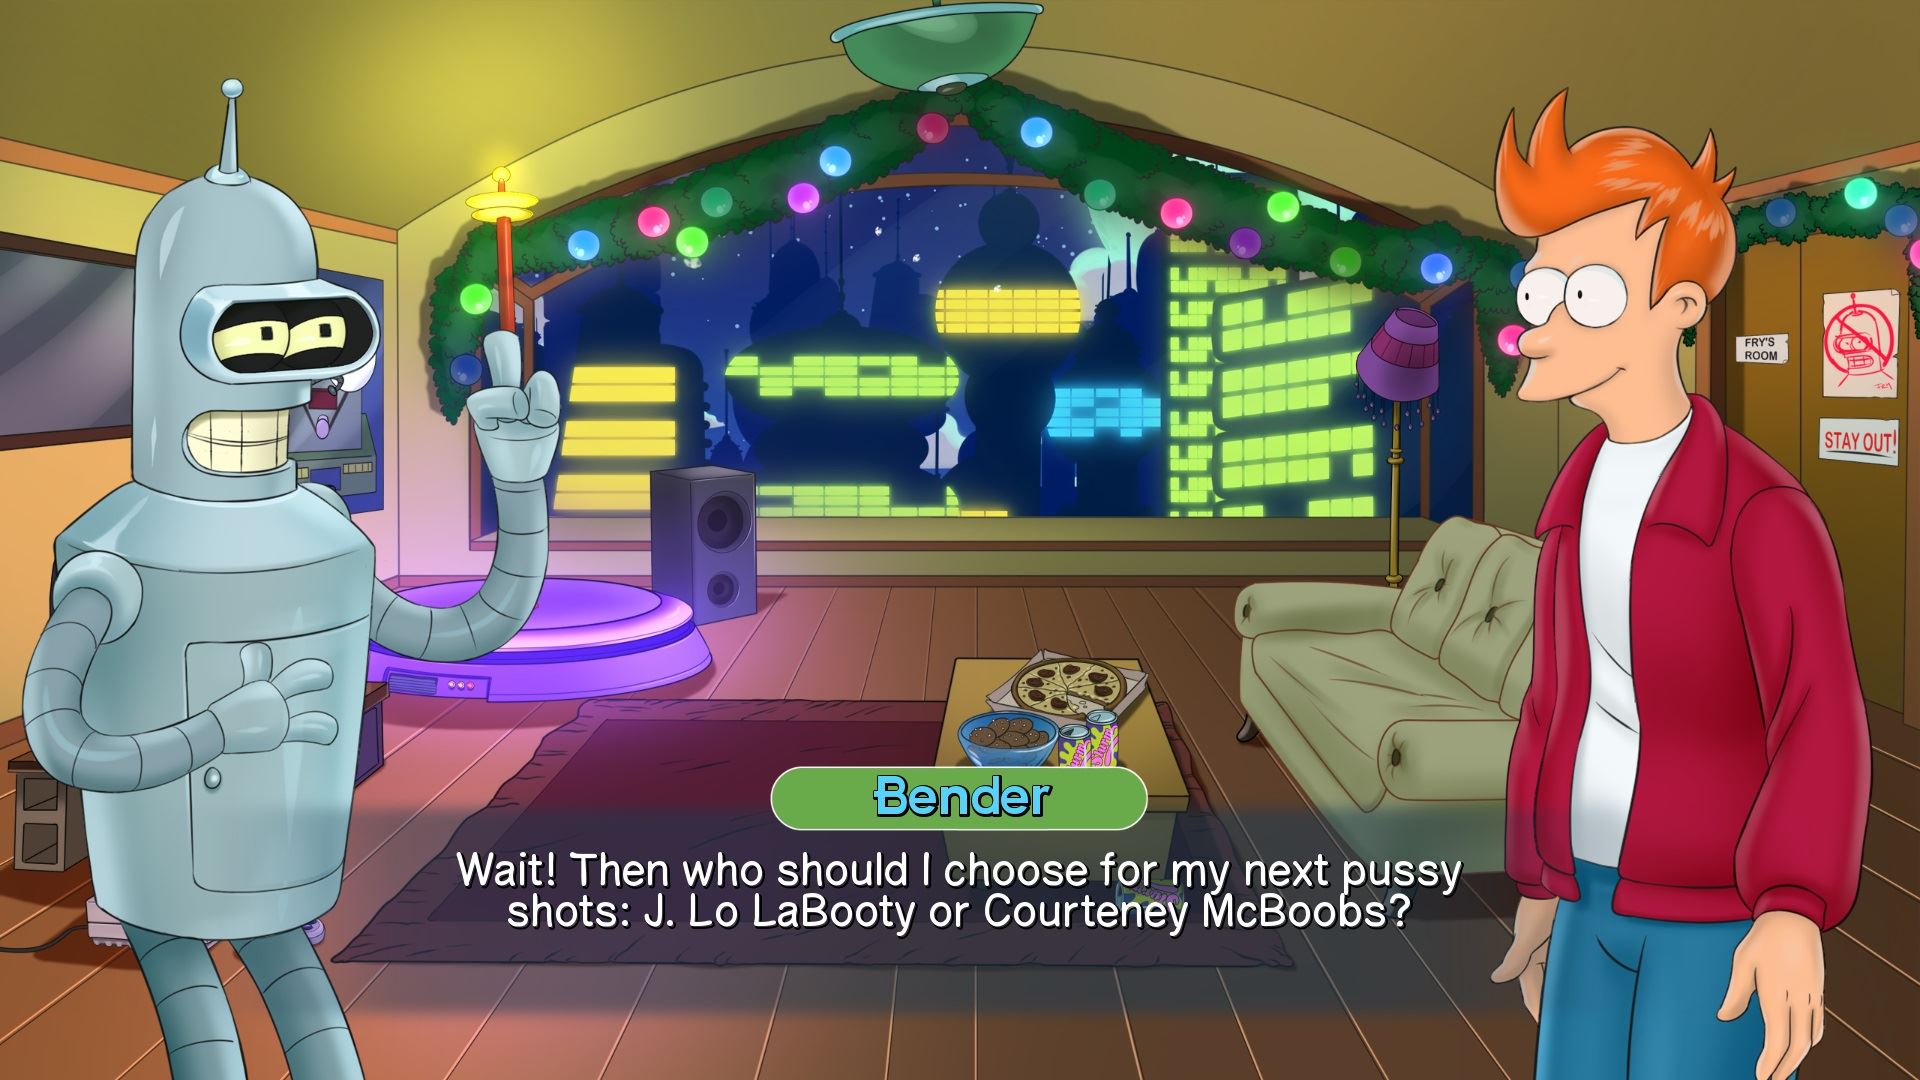 Cartoon Porn Futurama Crossover - Futurama: Lust in Space Ren'Py Porn Sex Game v.0.19.9 Download for Windows,  MacOS, Linux